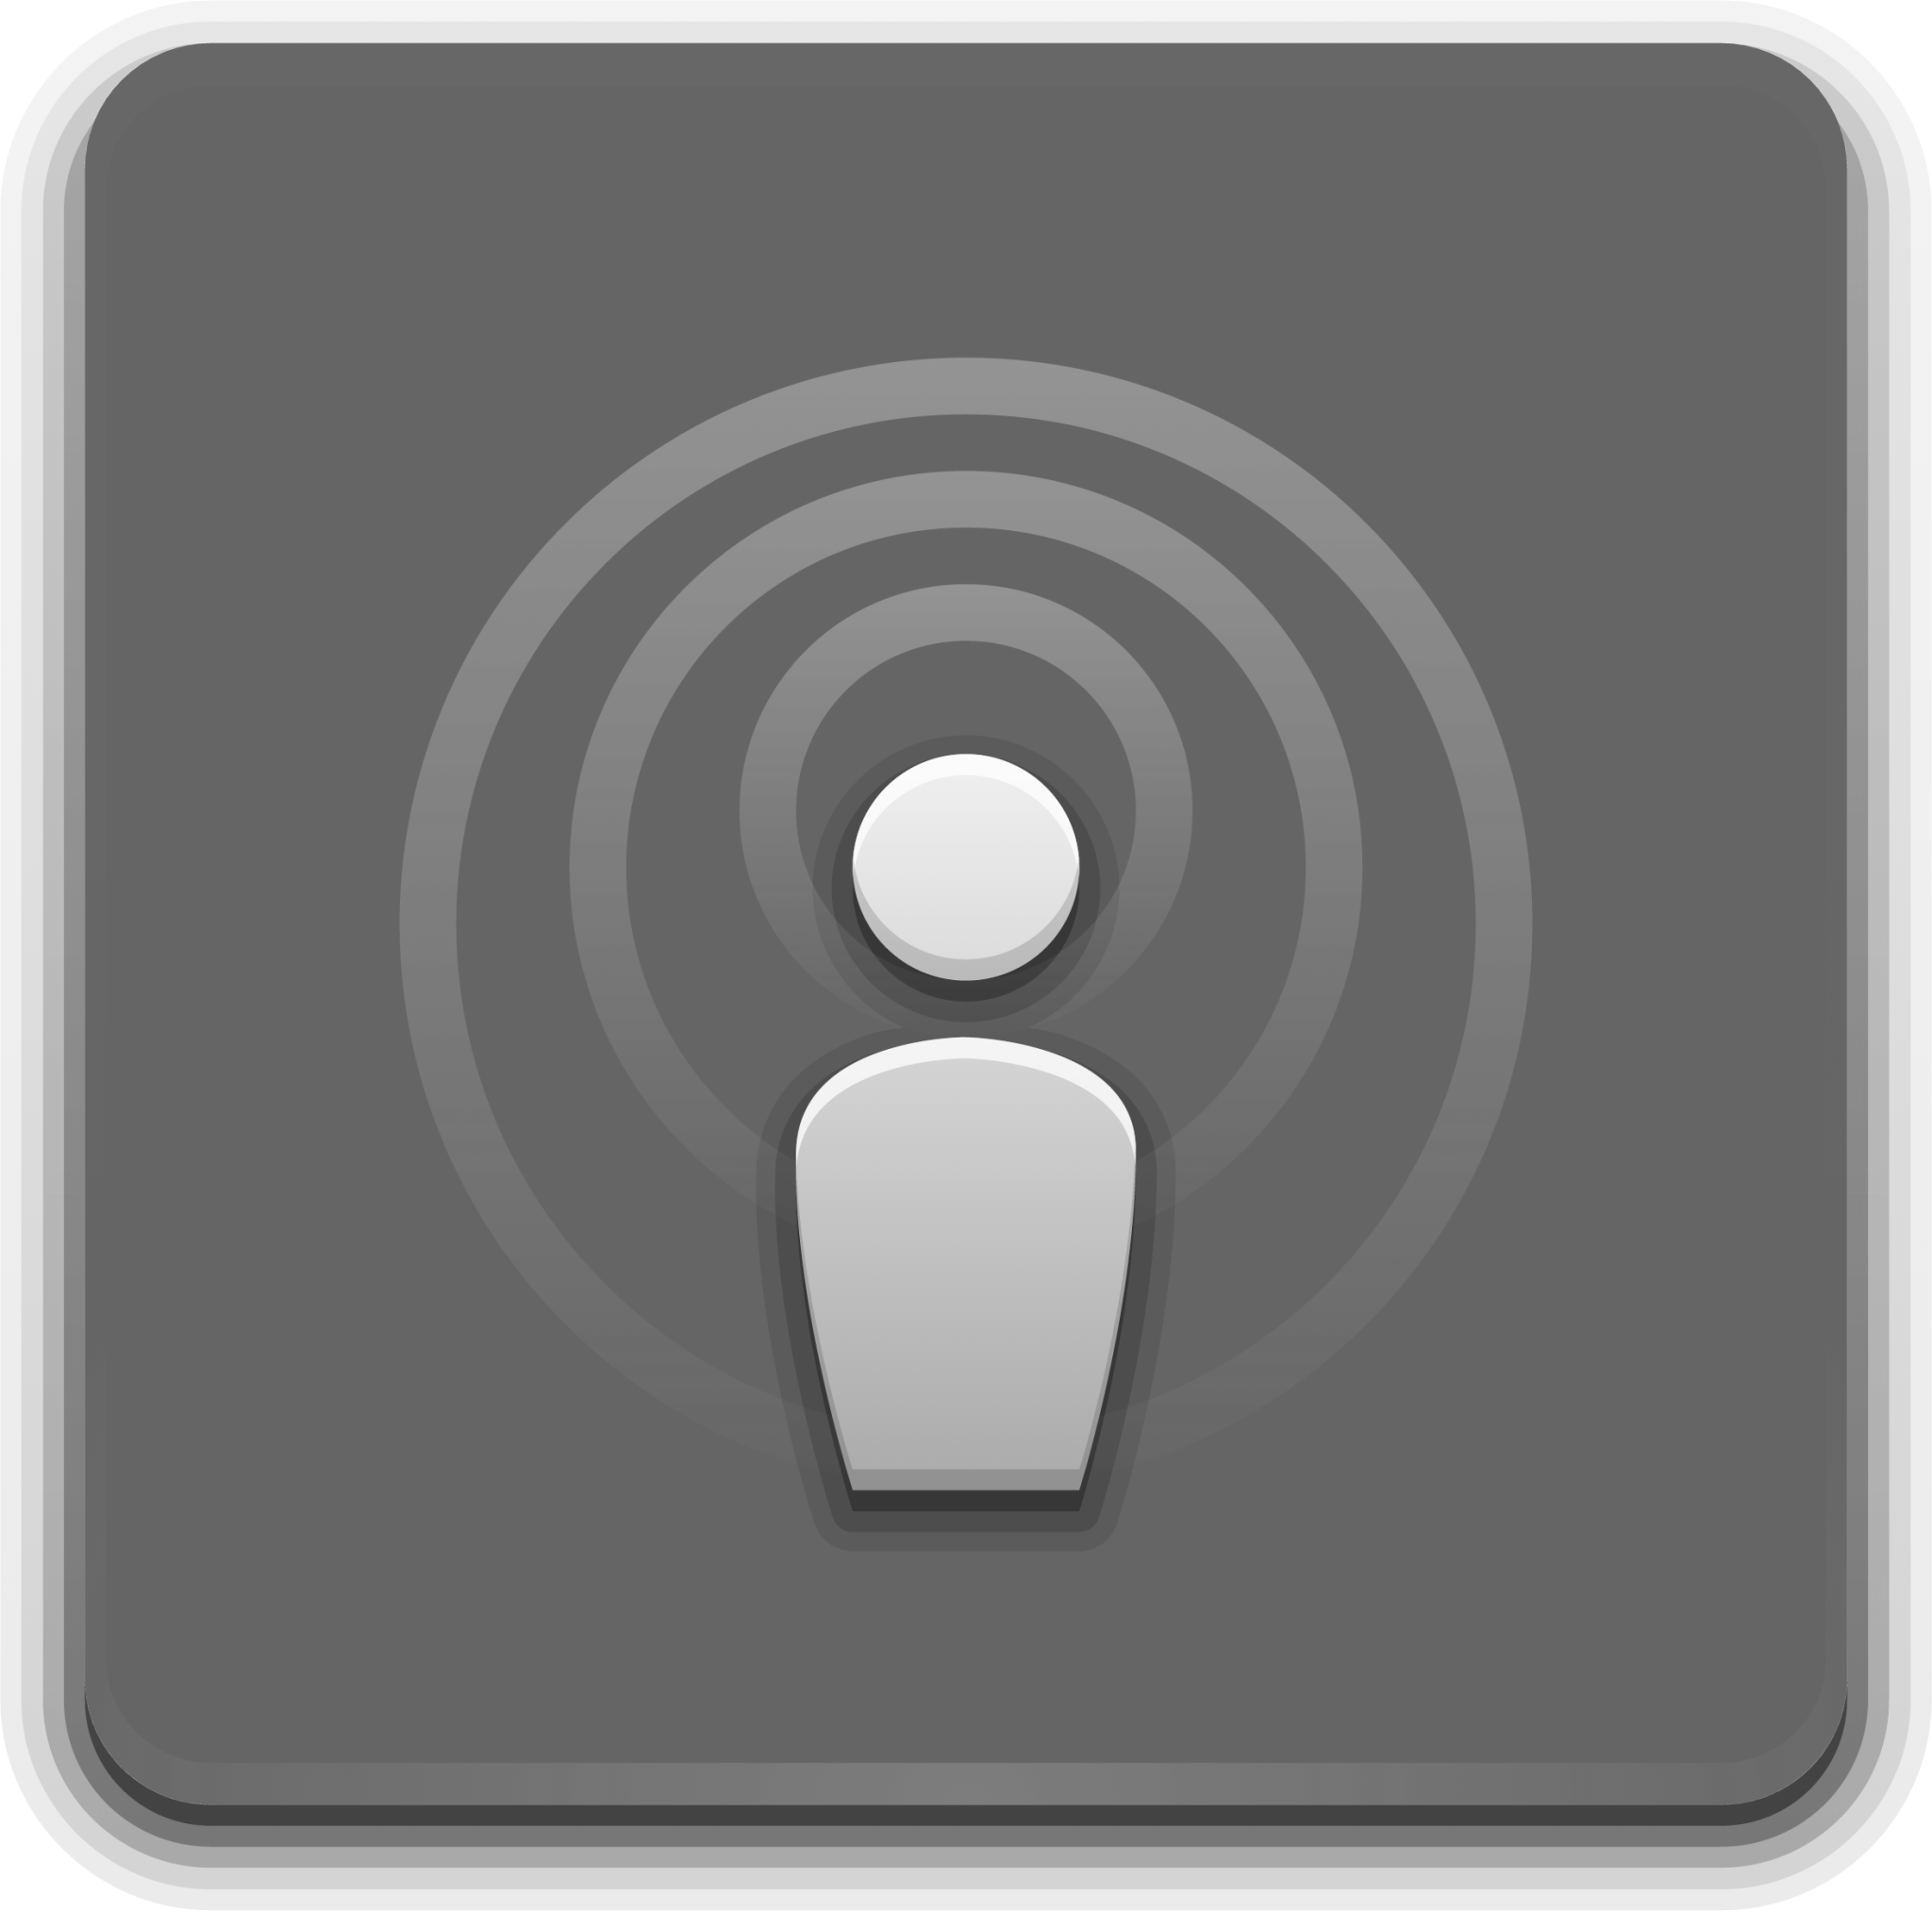 podcast new icon